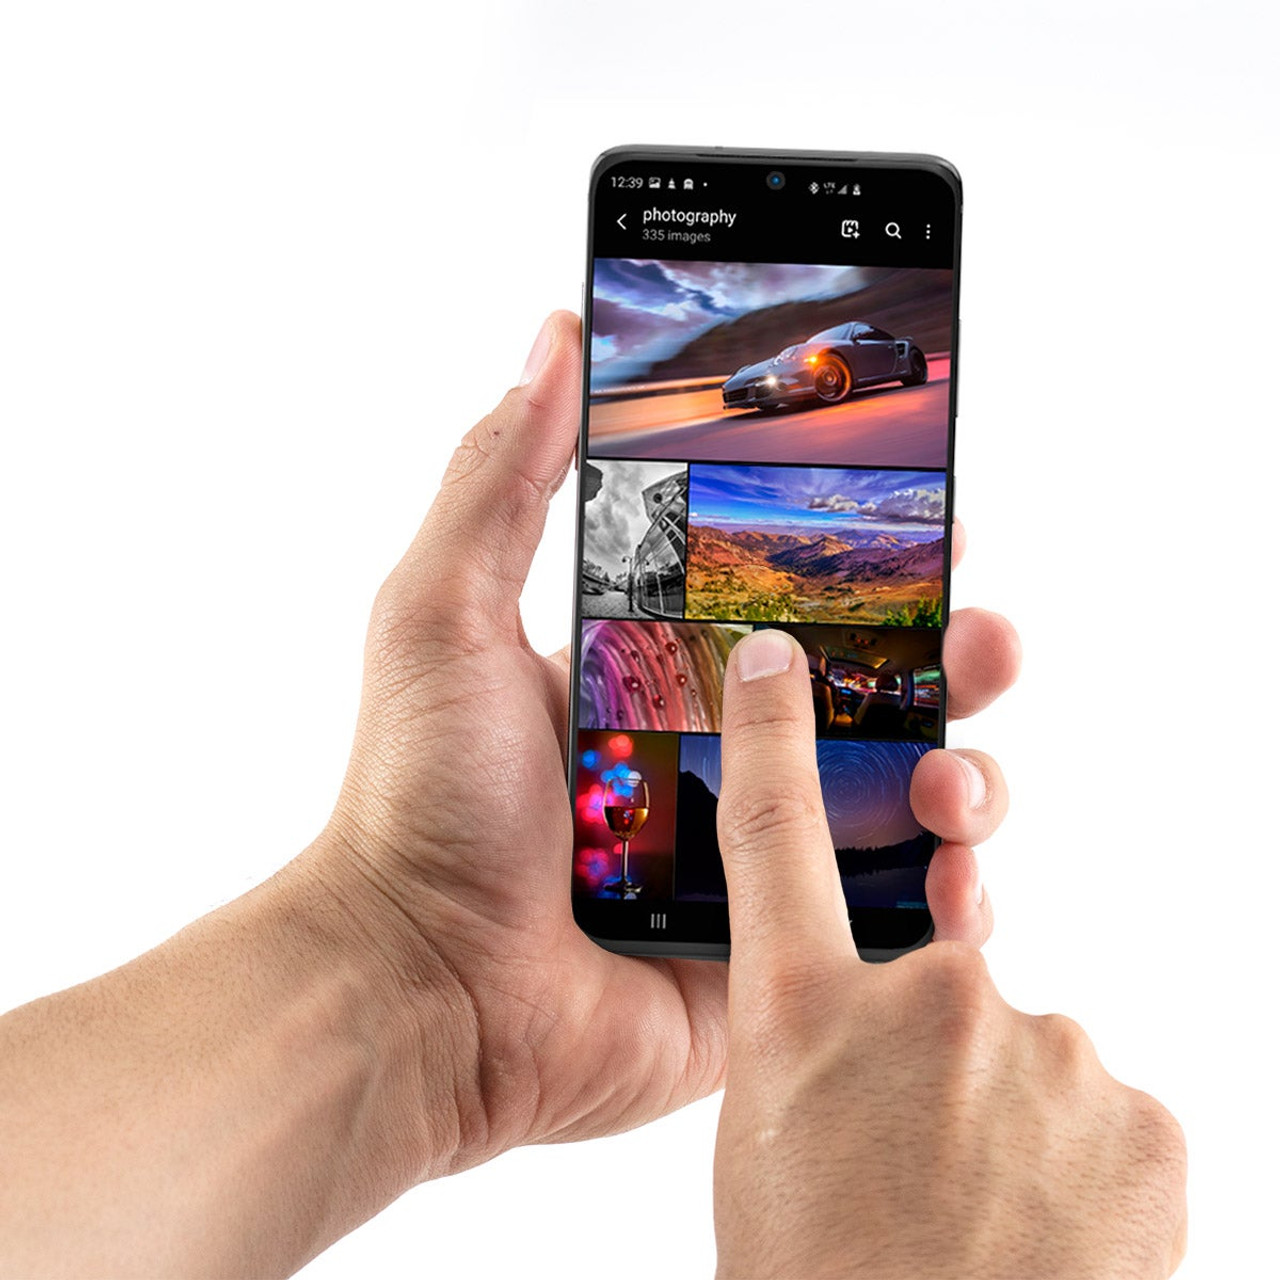 NEW Patent Pending DIY Samsung Galaxy S20~S23 Ultra Screen Glass